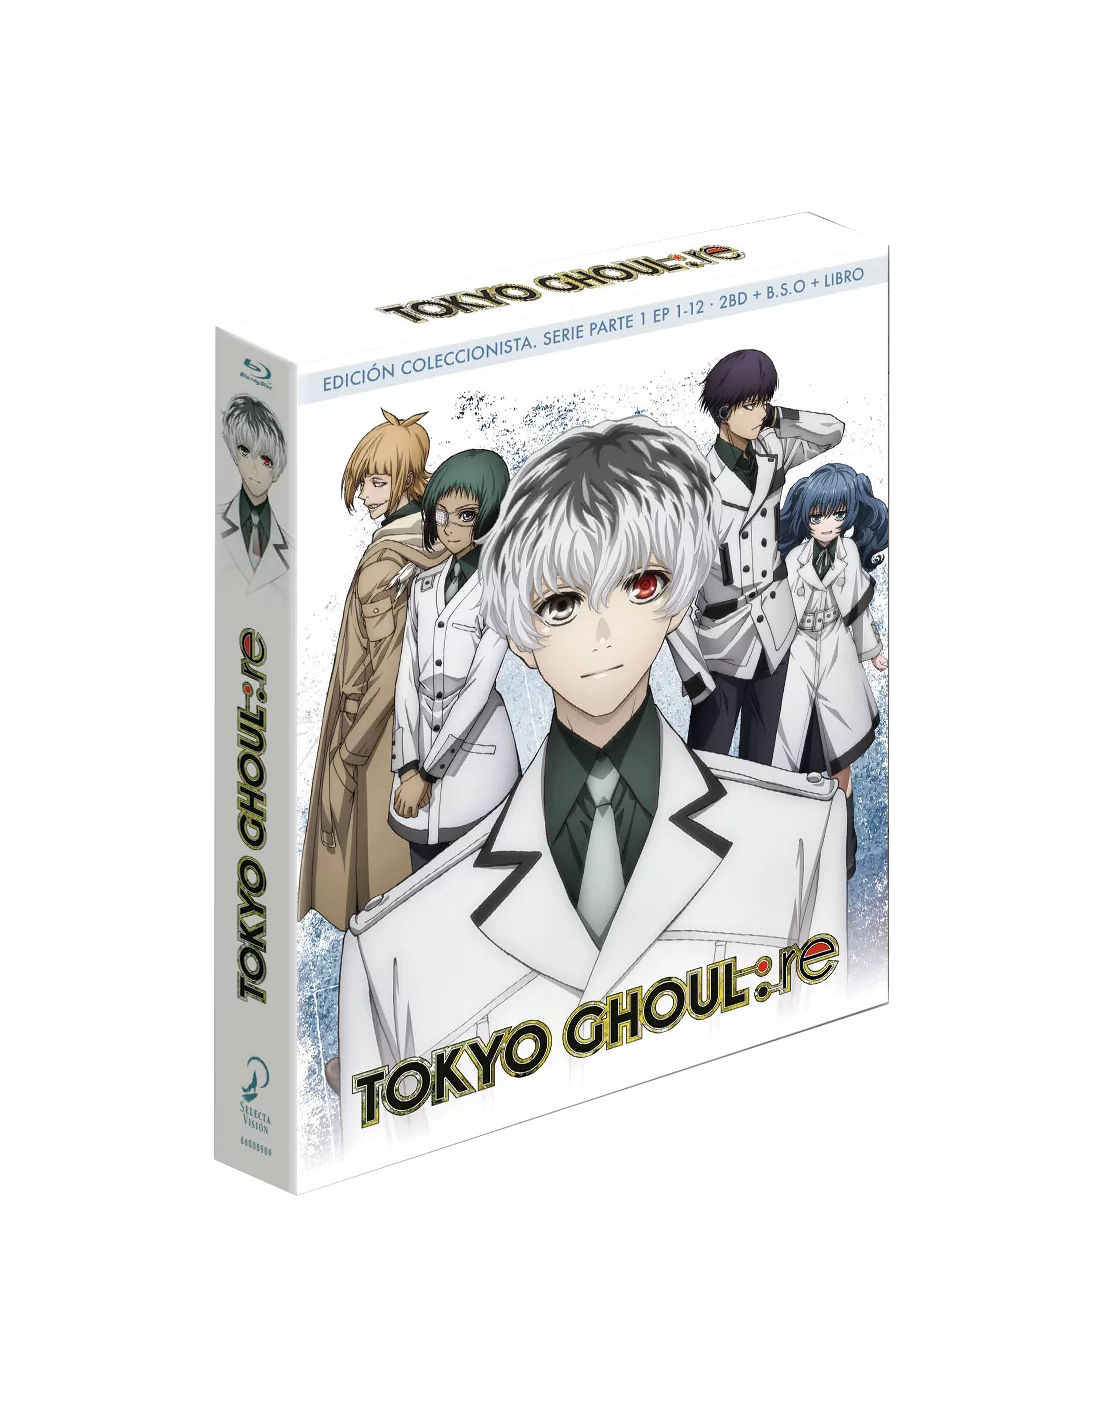 doble hazlo plano Masaje TOKYO GHOUL: RE episodios 1 a 12 Blu-ray Coleccionista